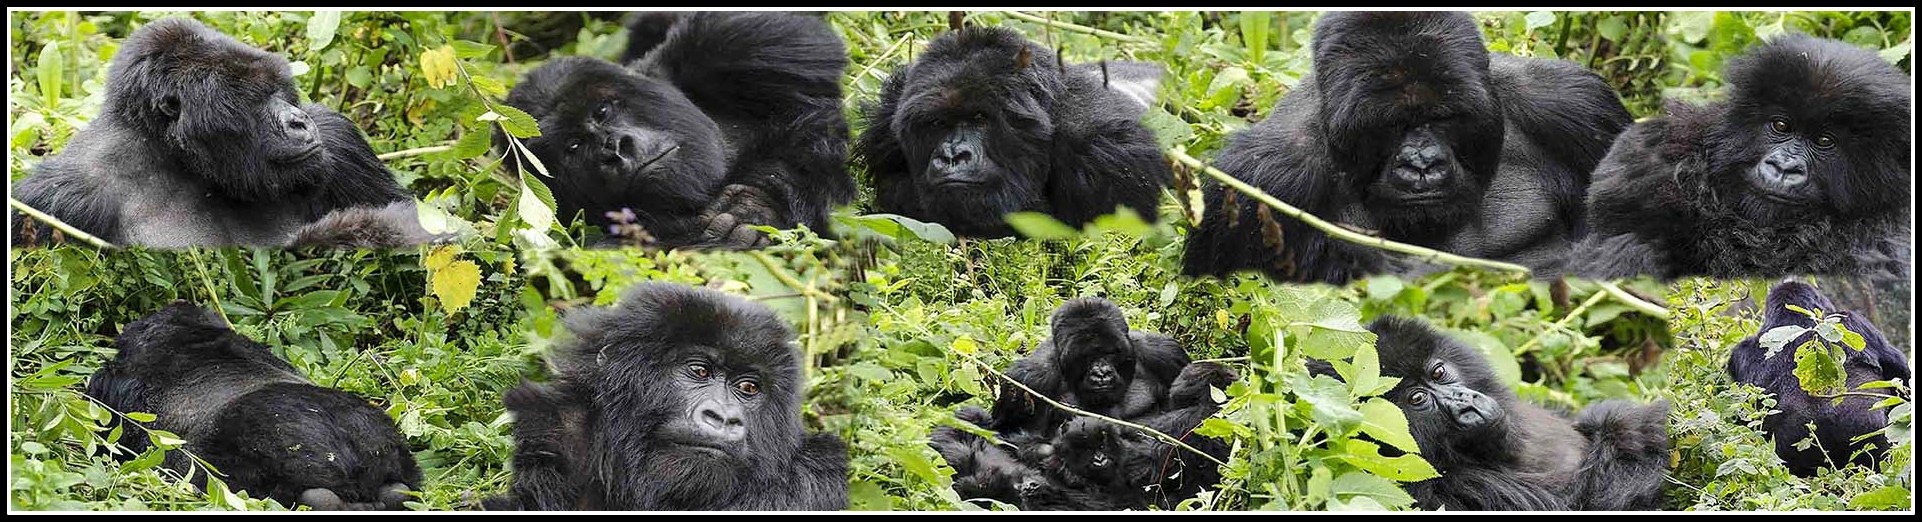 Gorilas de Montaña o Espalda Plateada - Ruanda - marco